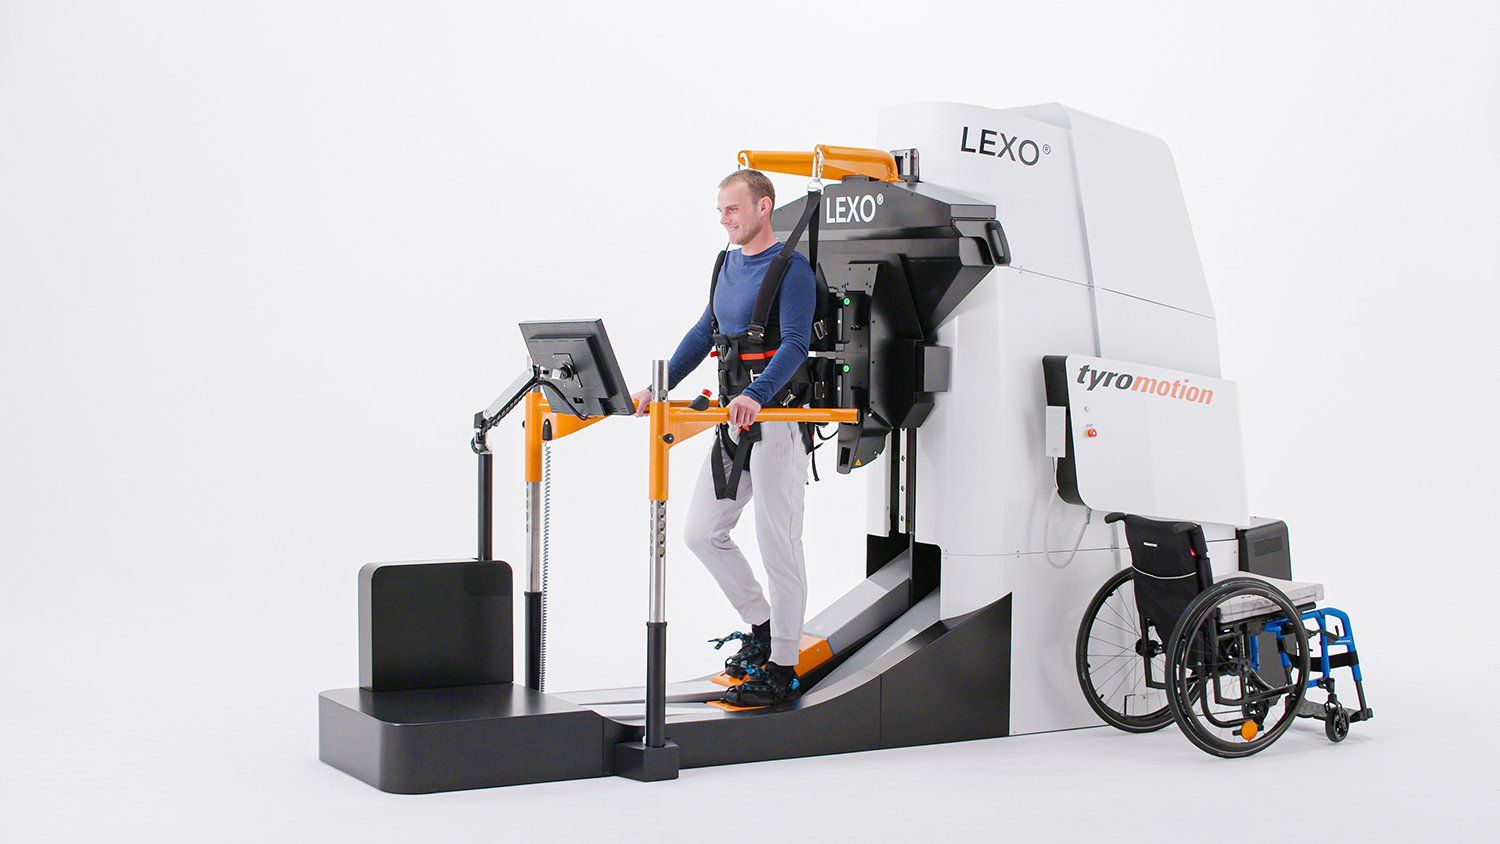 LEXO Robotic Gait Trainer by Tyromotion